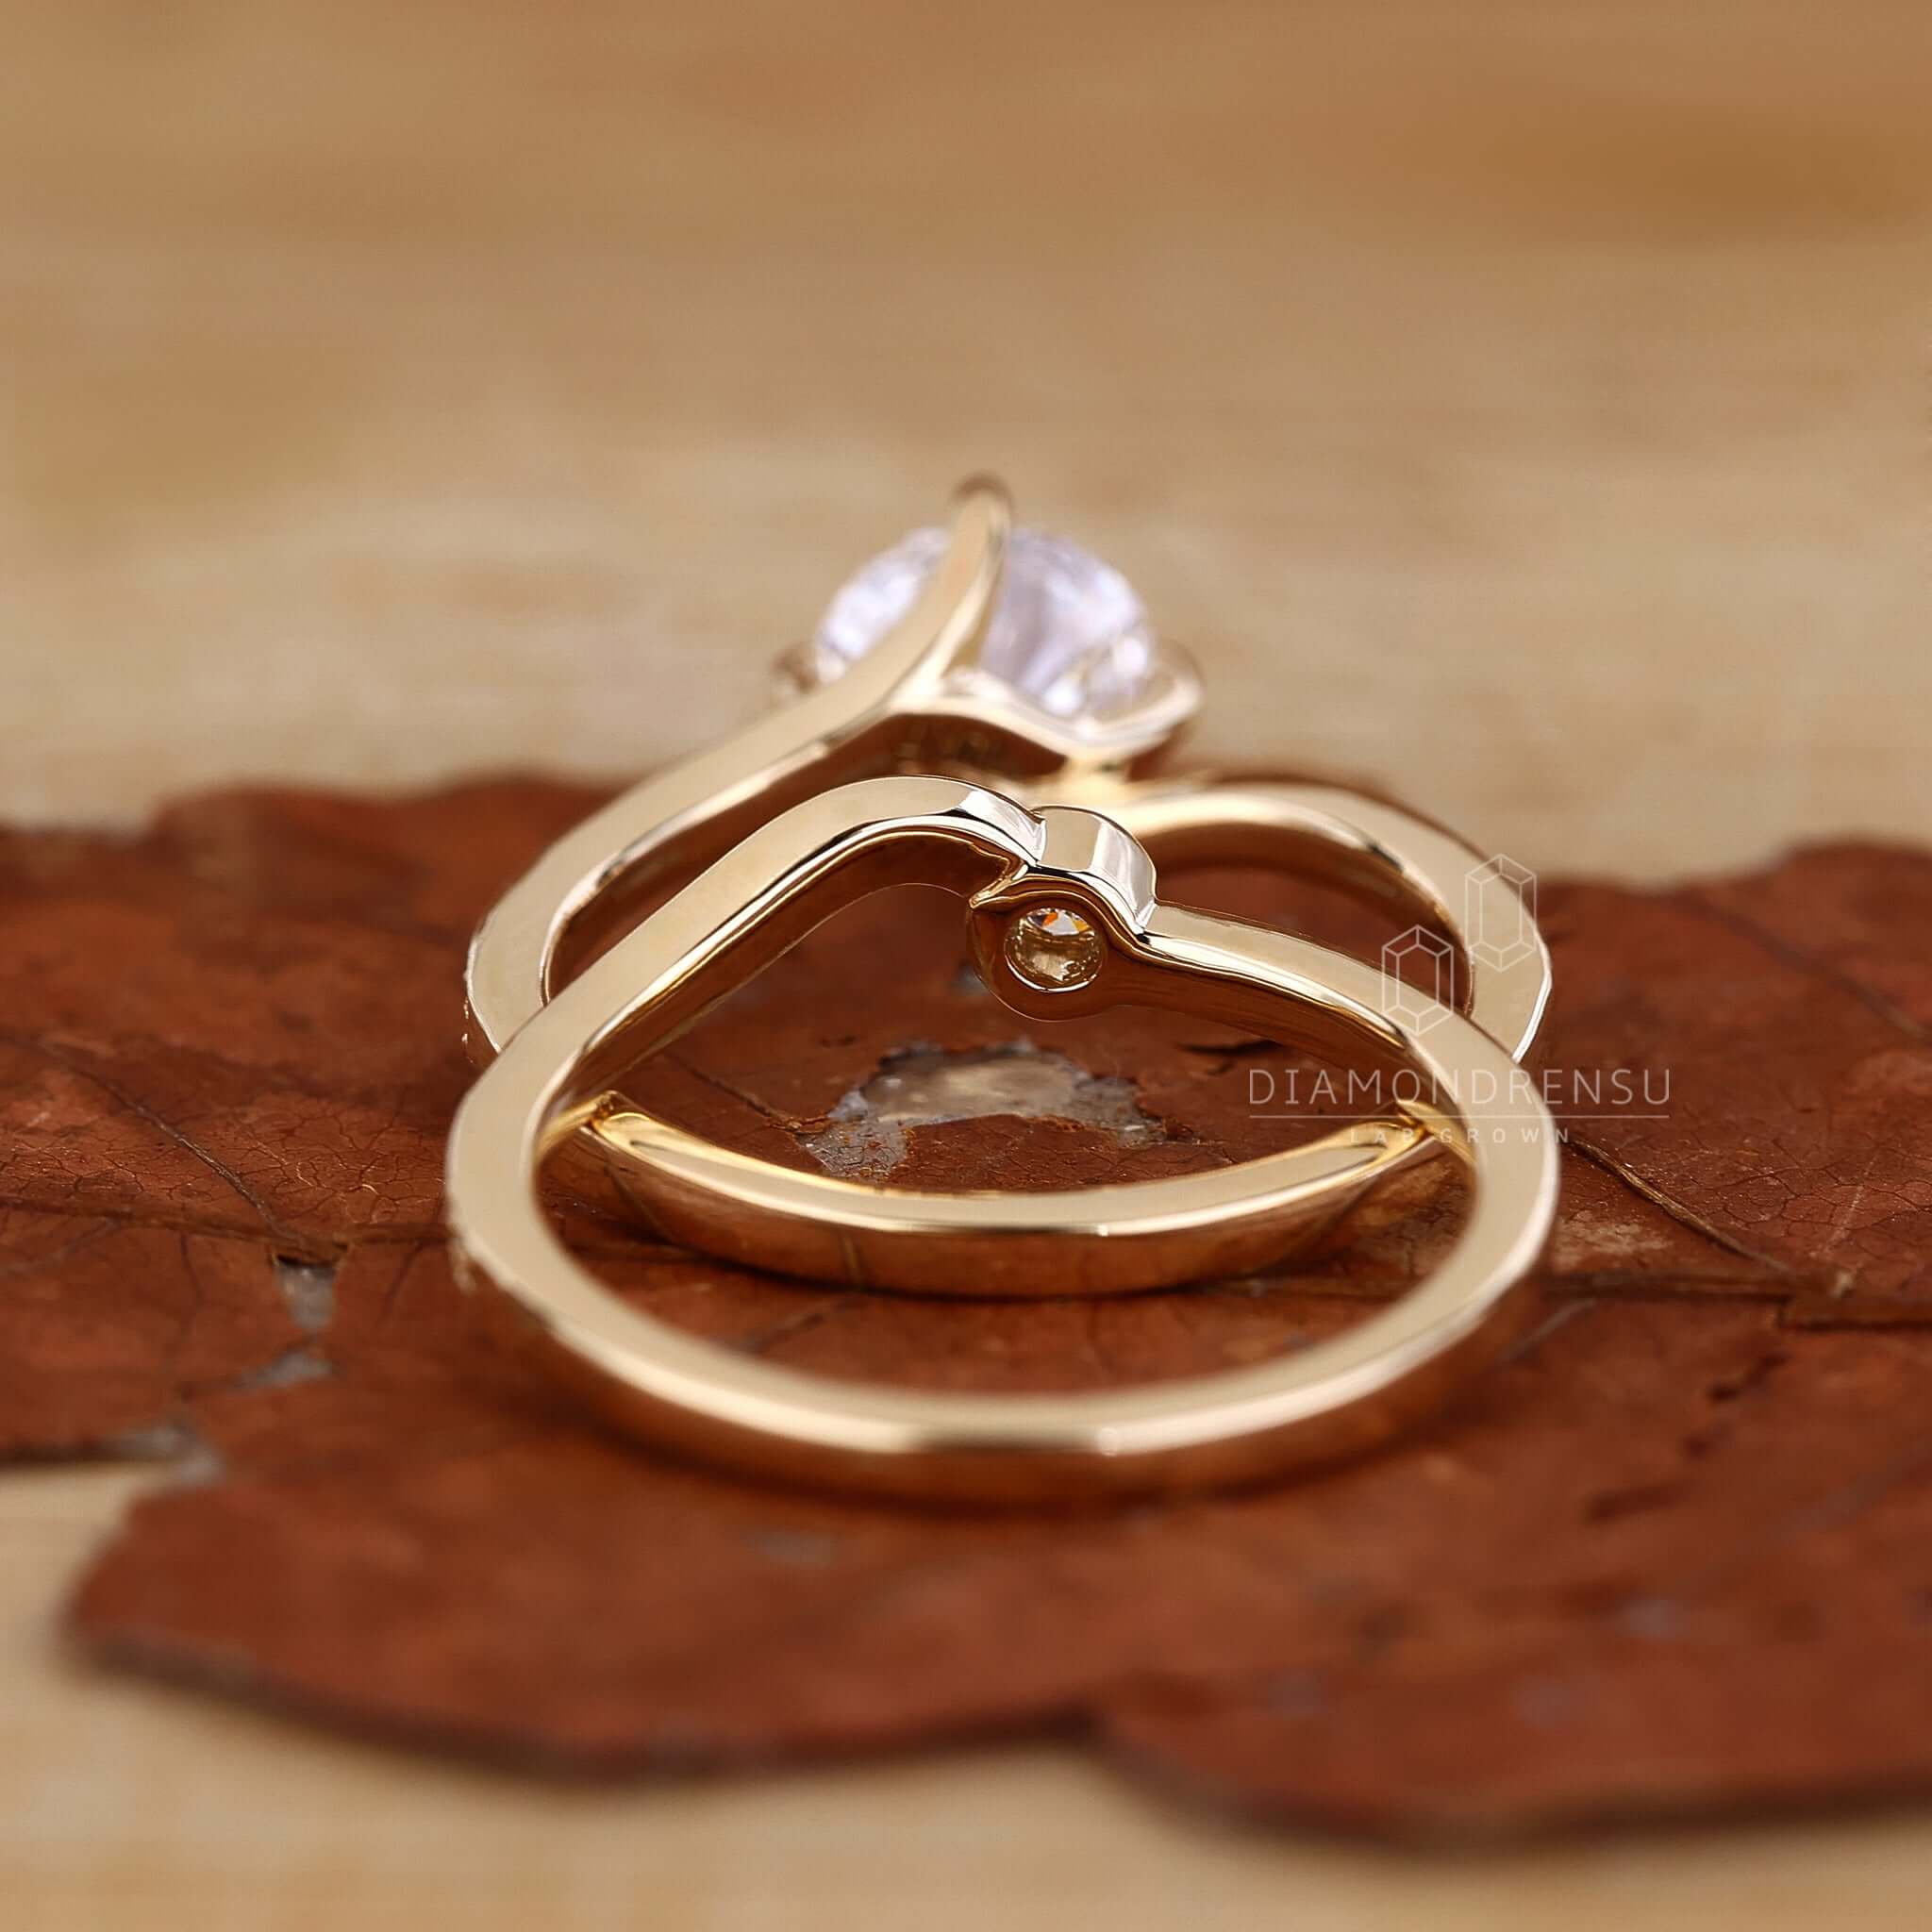 Sparkling round diamond wedding band, symbolizing eternal love and commitment